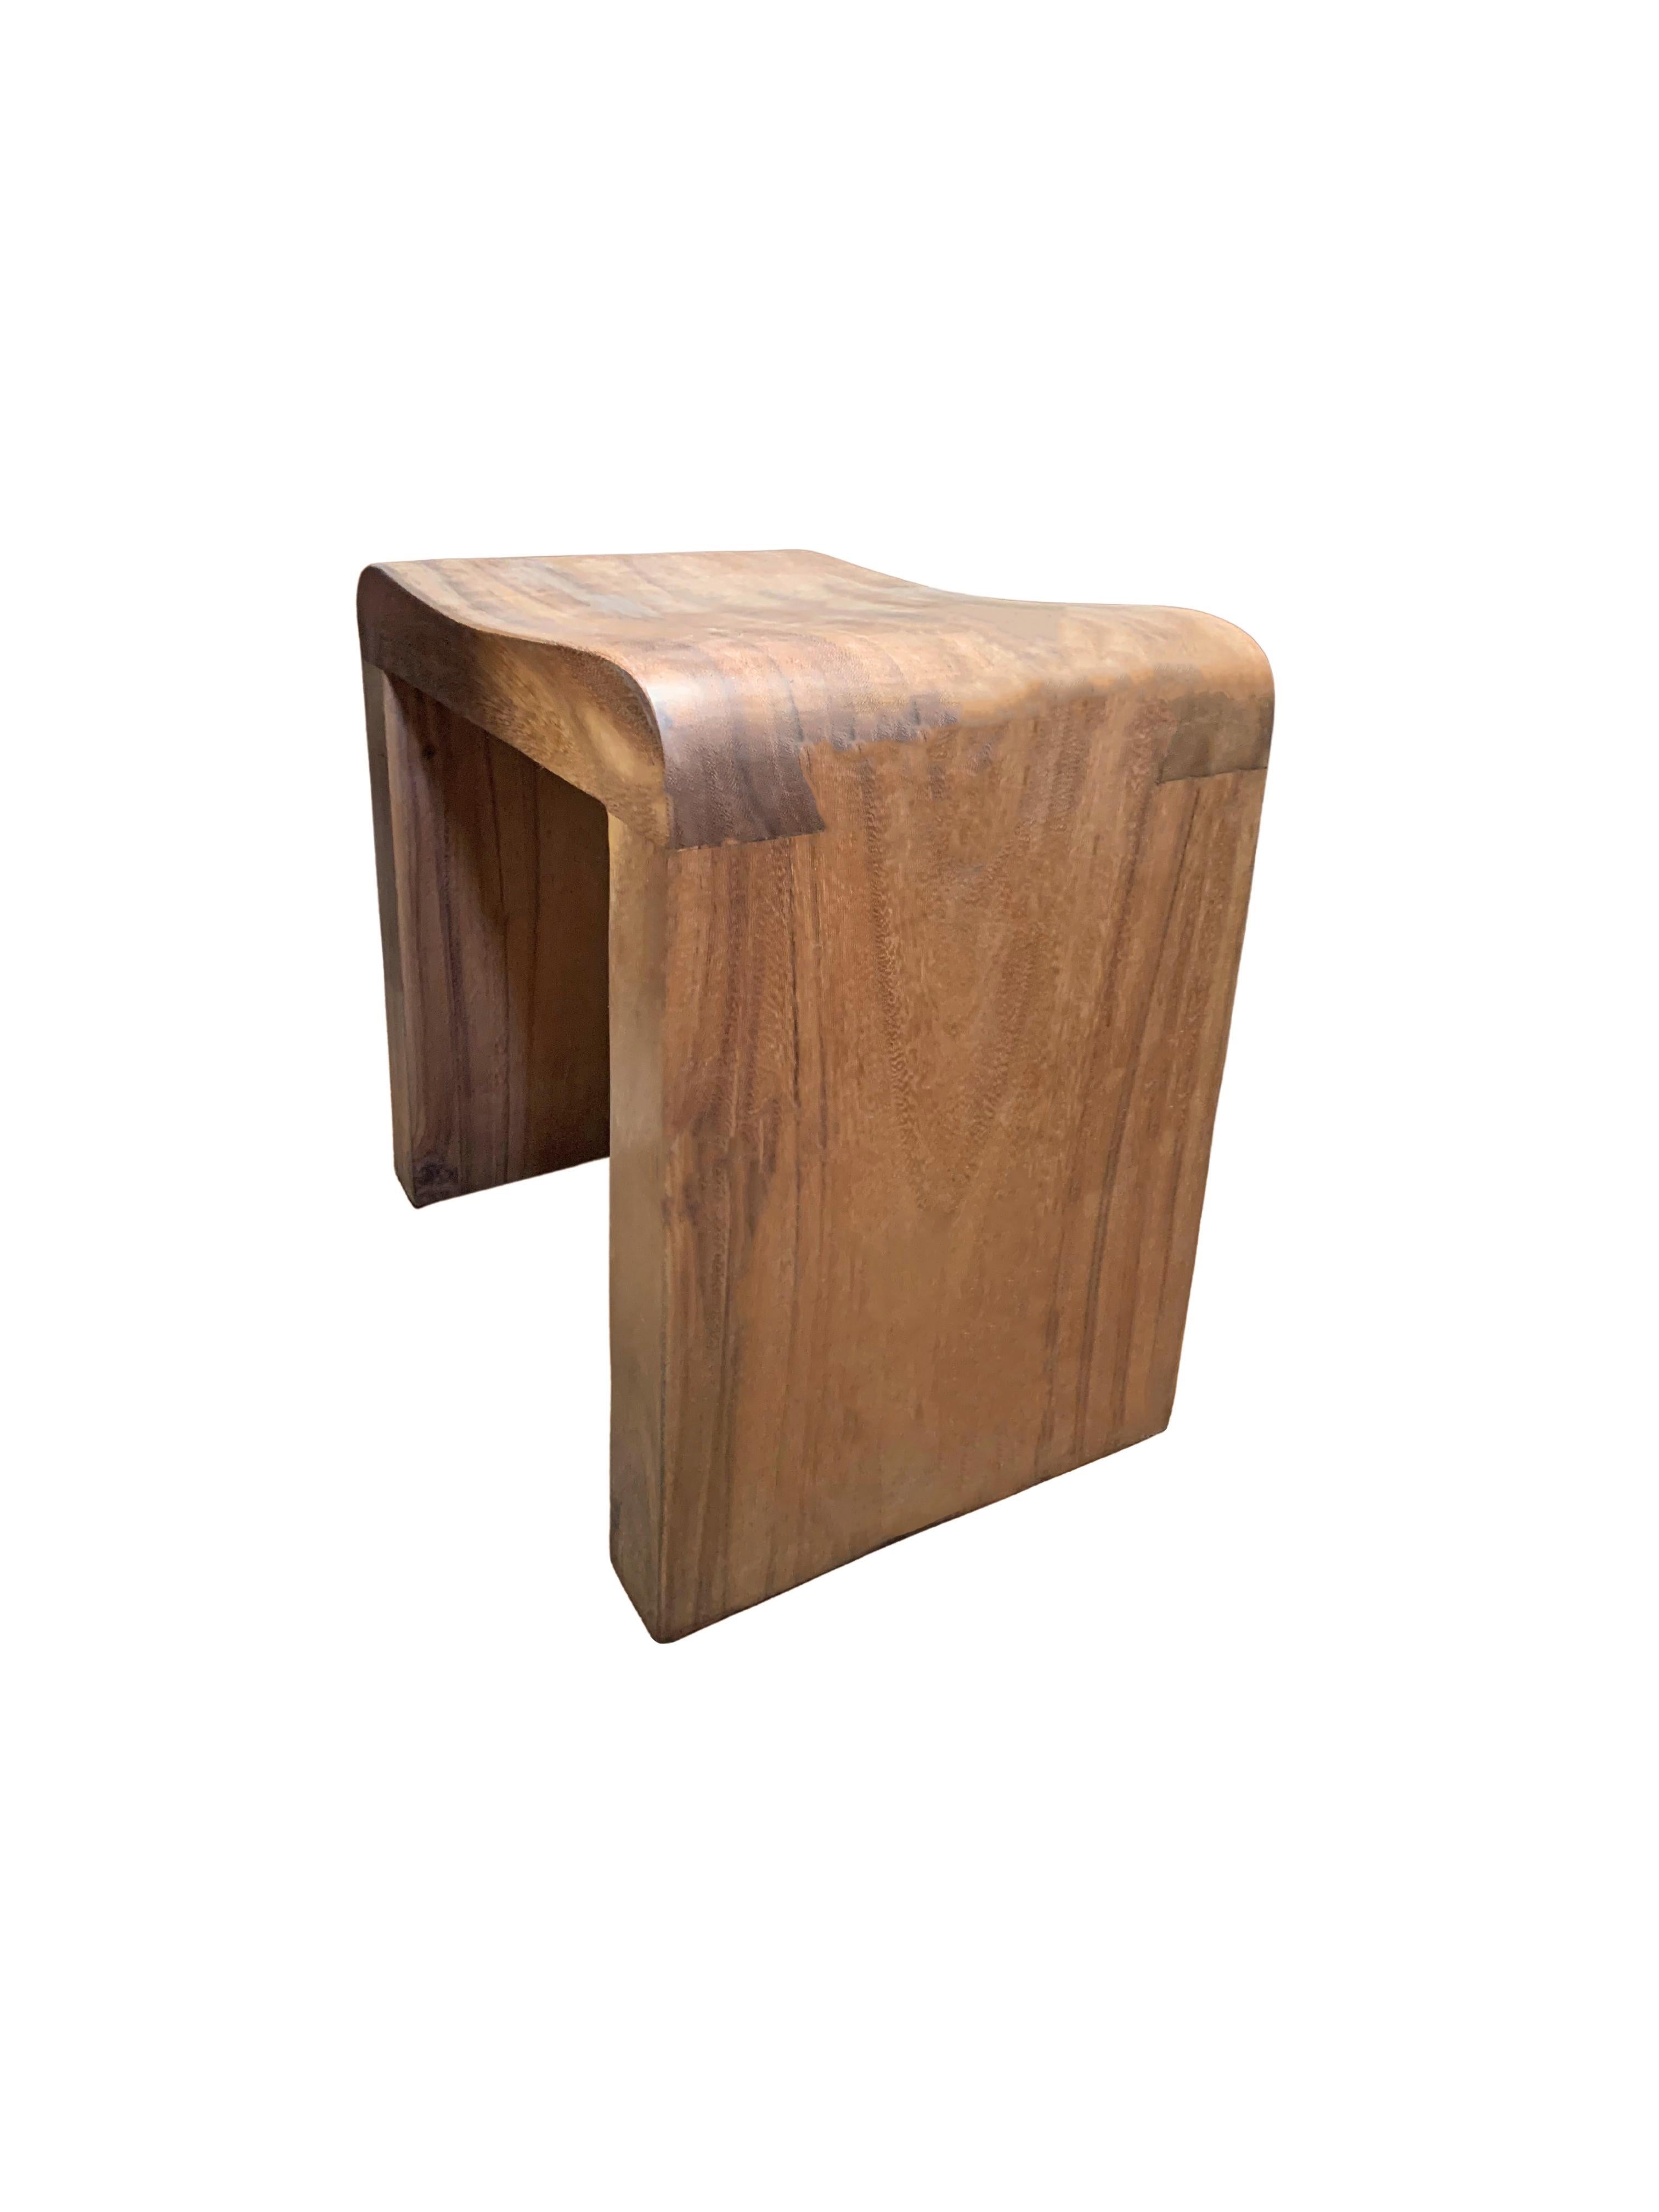 Organic Modern Sculptural Teak Wood Stool For Sale